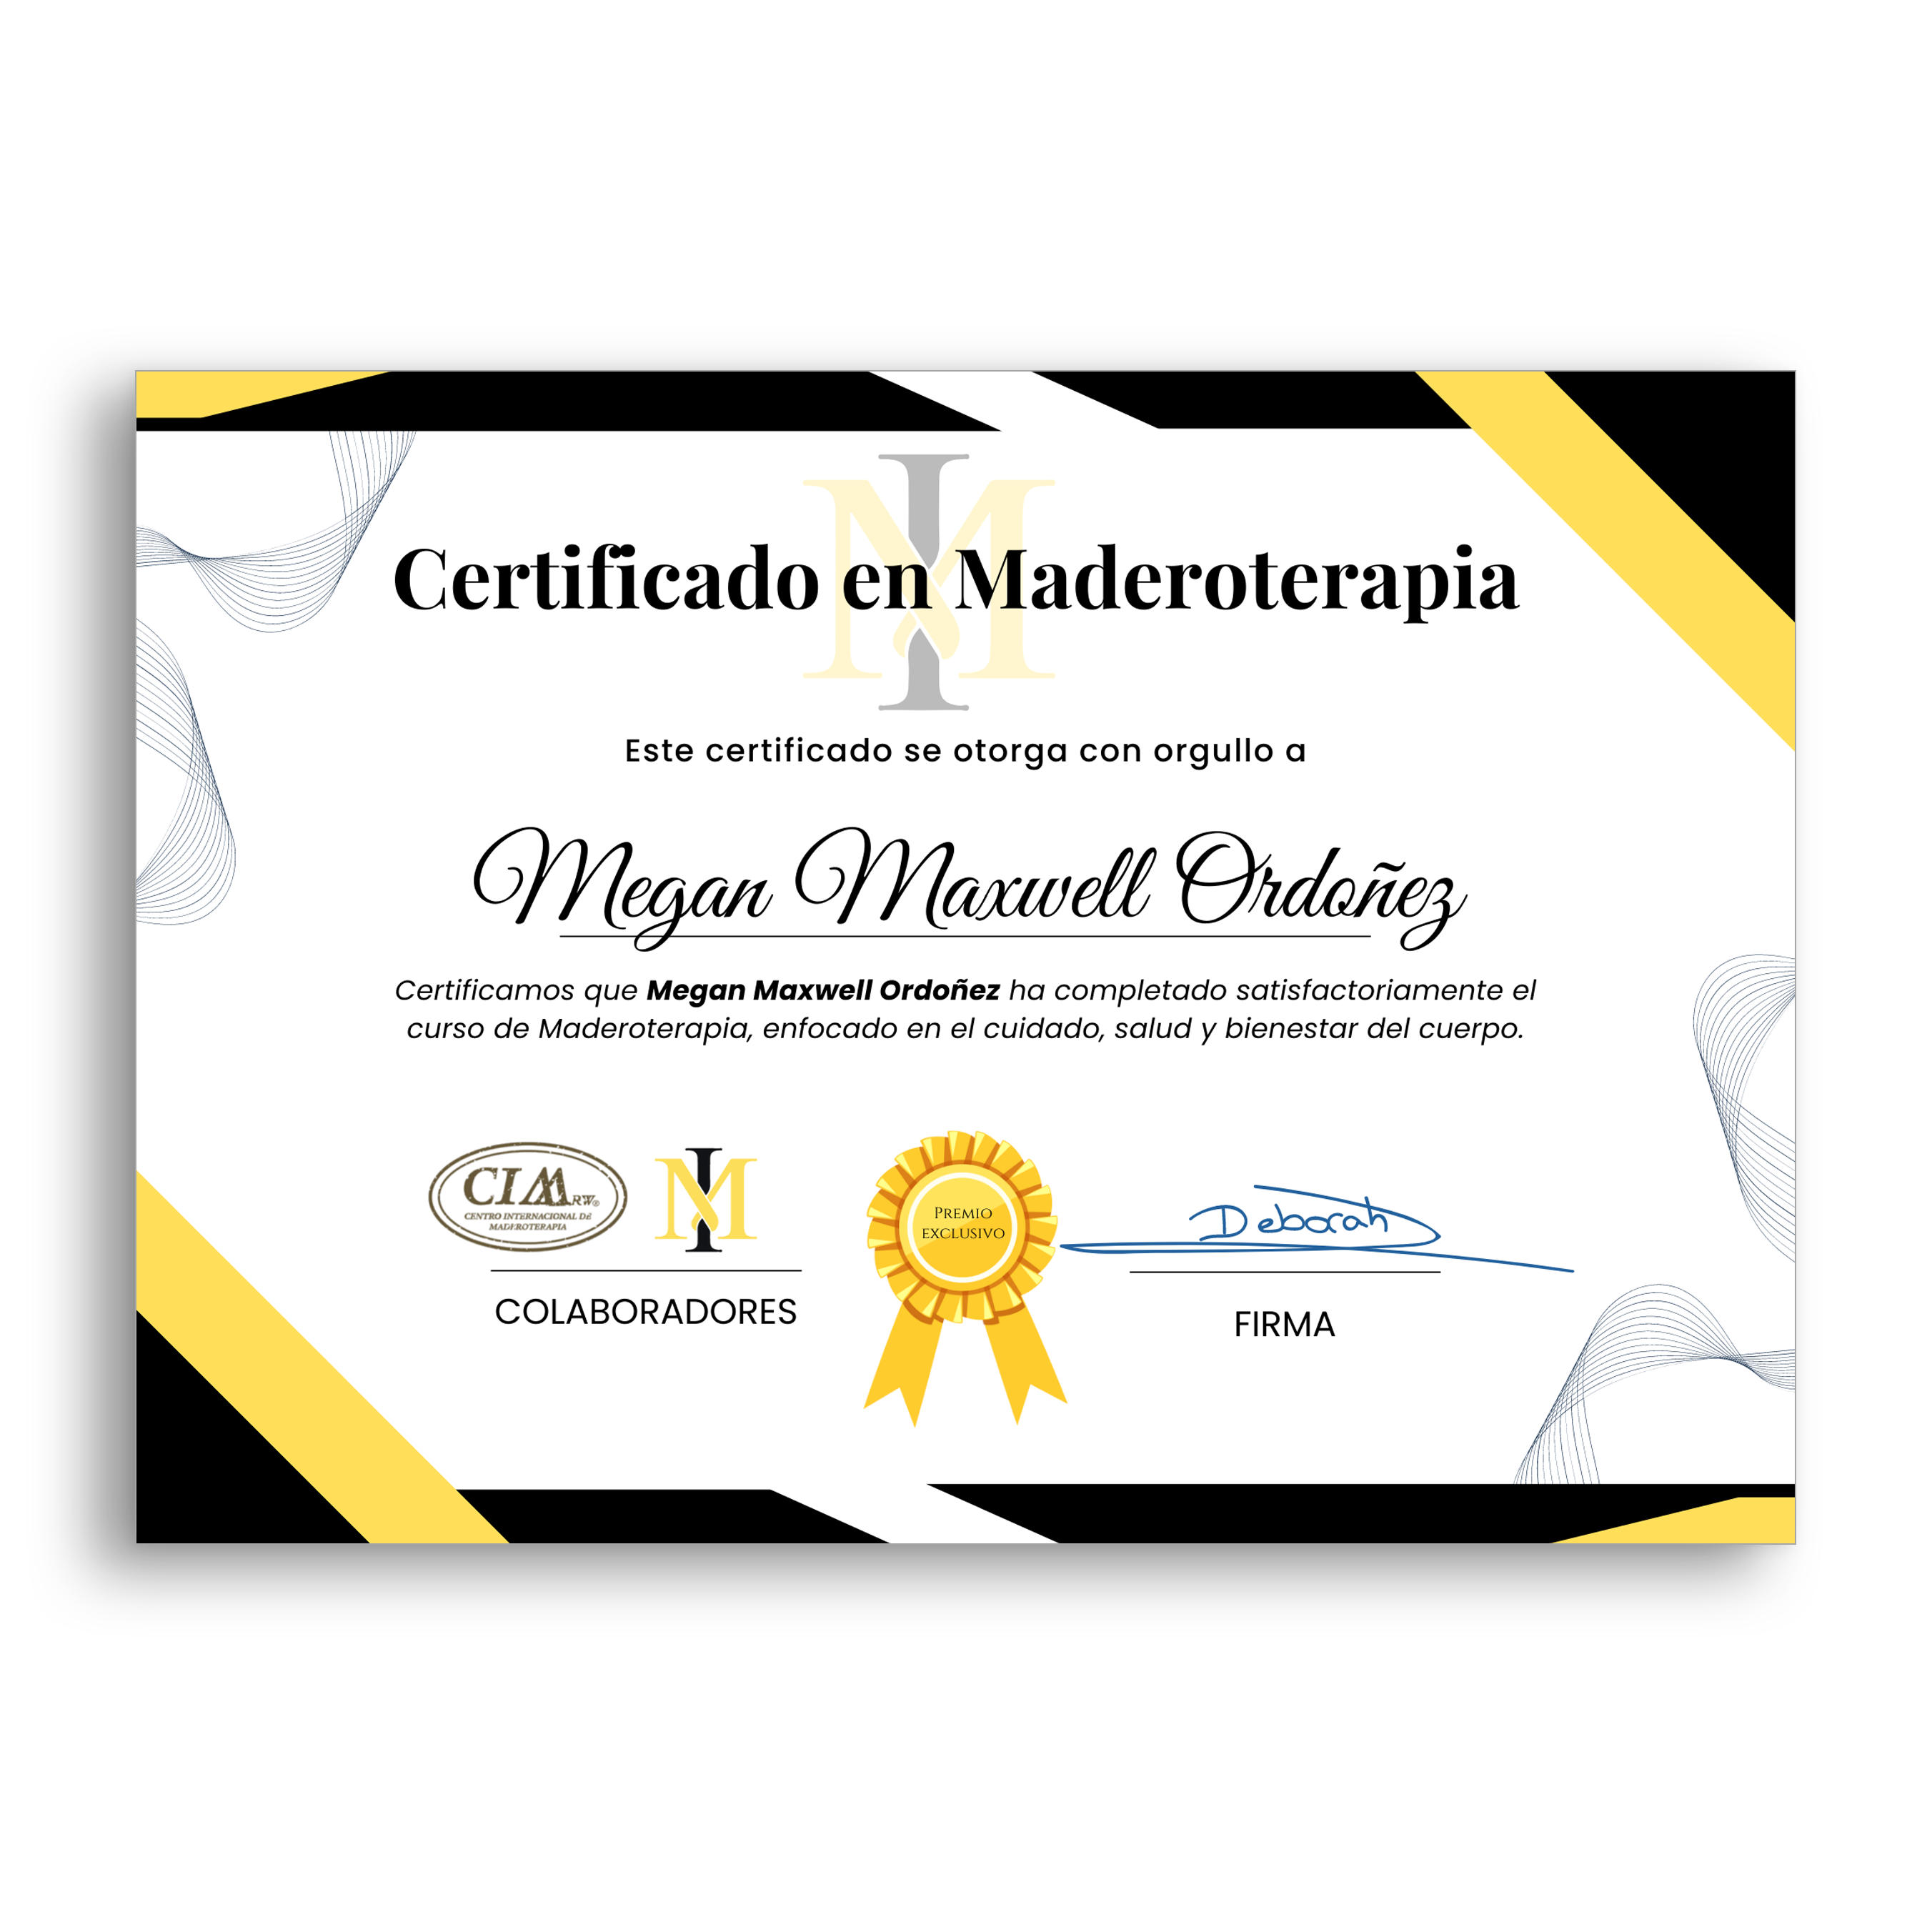 Certificado Maderoterapia